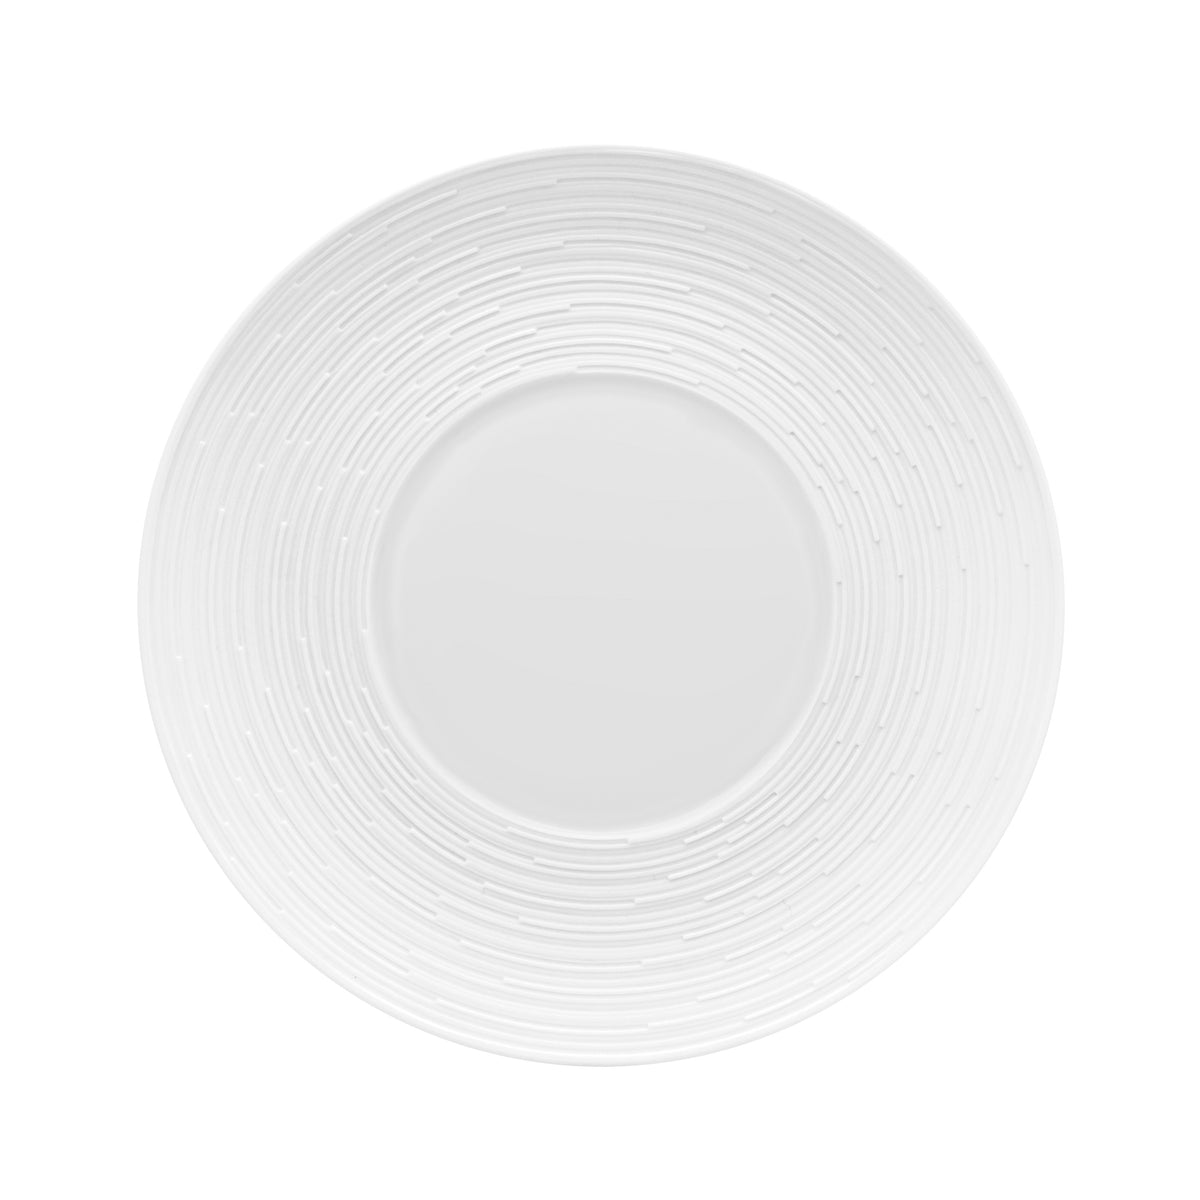 LABYRINTHE - Dinner plate